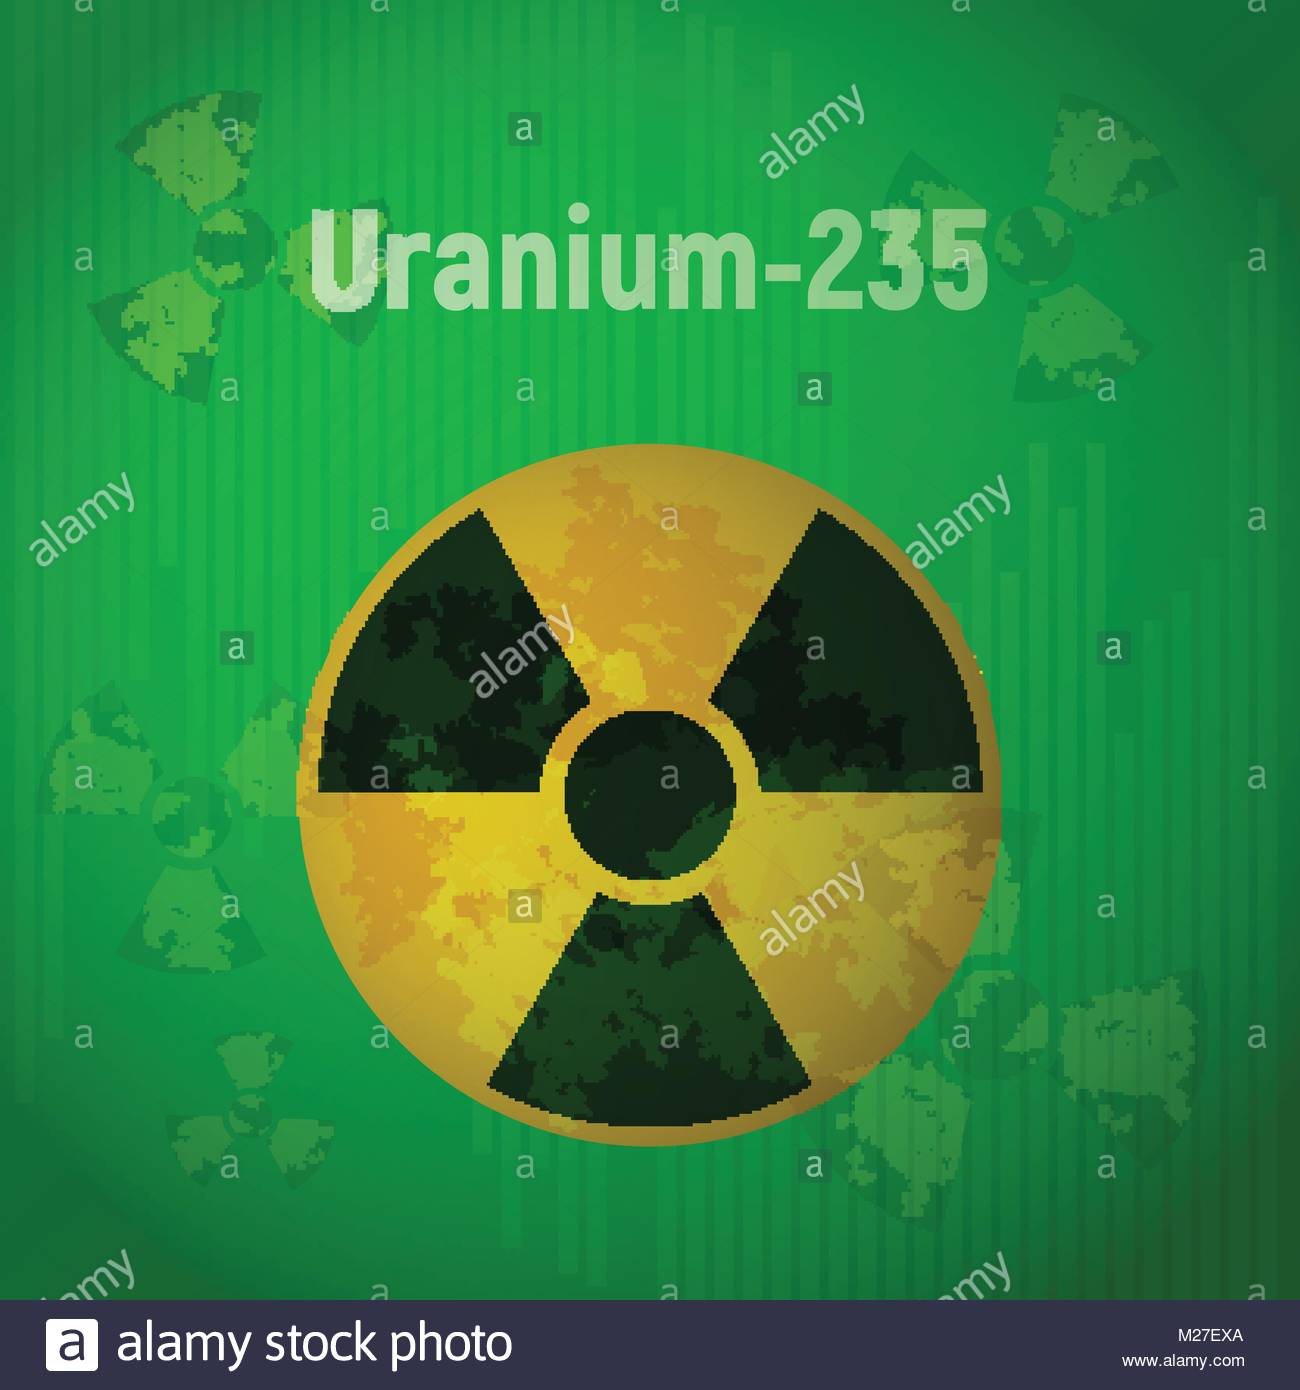 Uranium Stock Photos Image